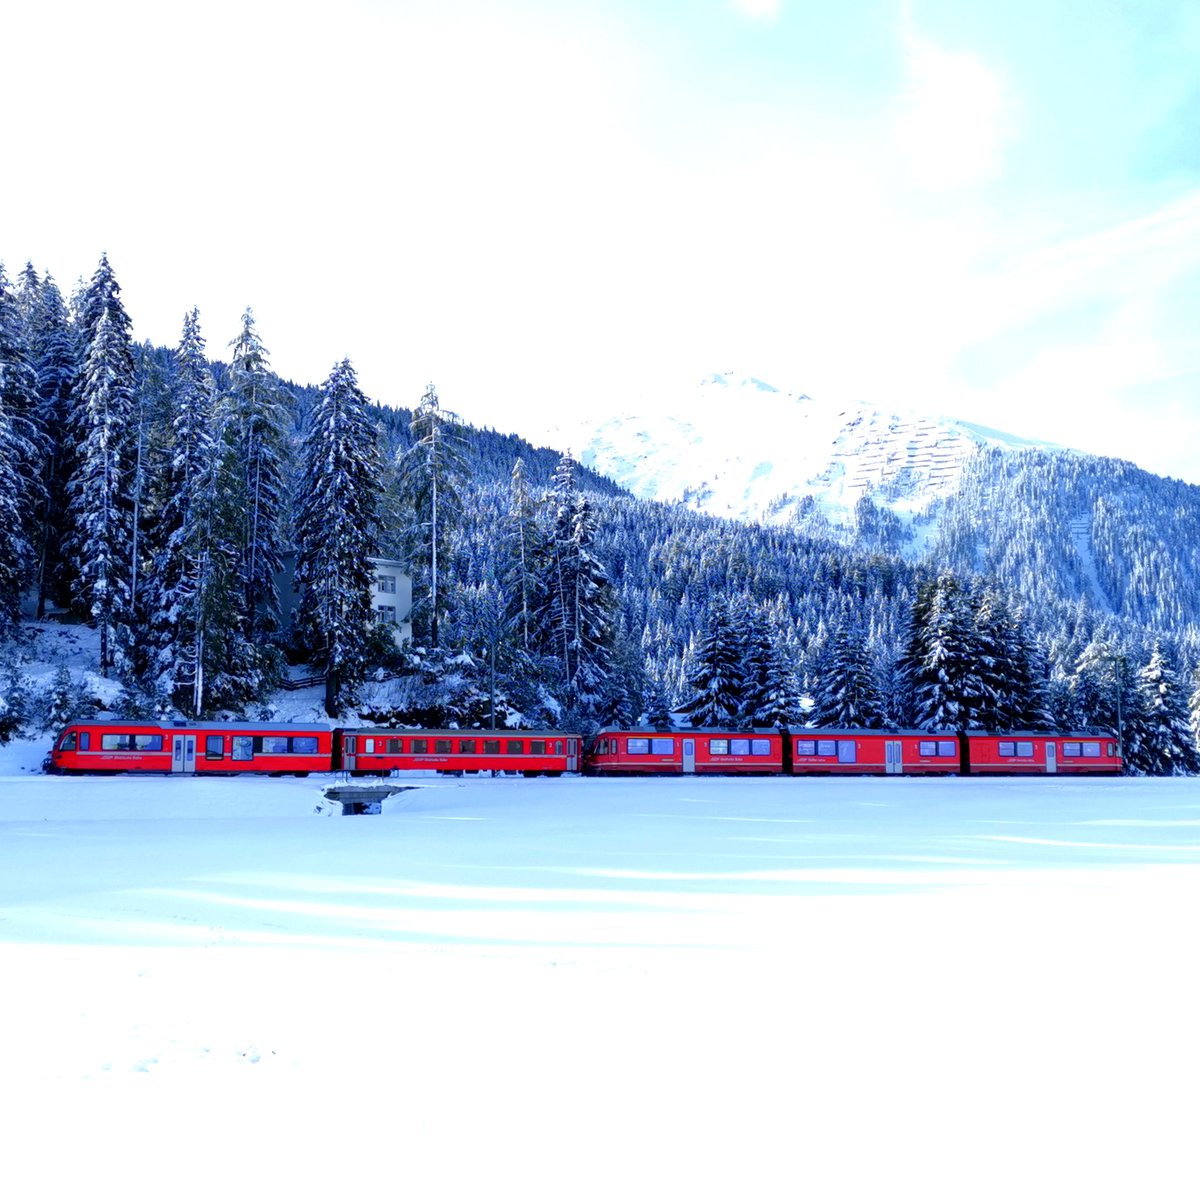 #GoodDay #september #sunday #snow @rhaetischebahn #winterisback #happy #neversummer #switzerland #winterwonderland @RailwayMuseum @Graubunden @GR_4o @TrainspotLive @T2Trainspotting @MySwitzerland_d @Swiss_eMobility